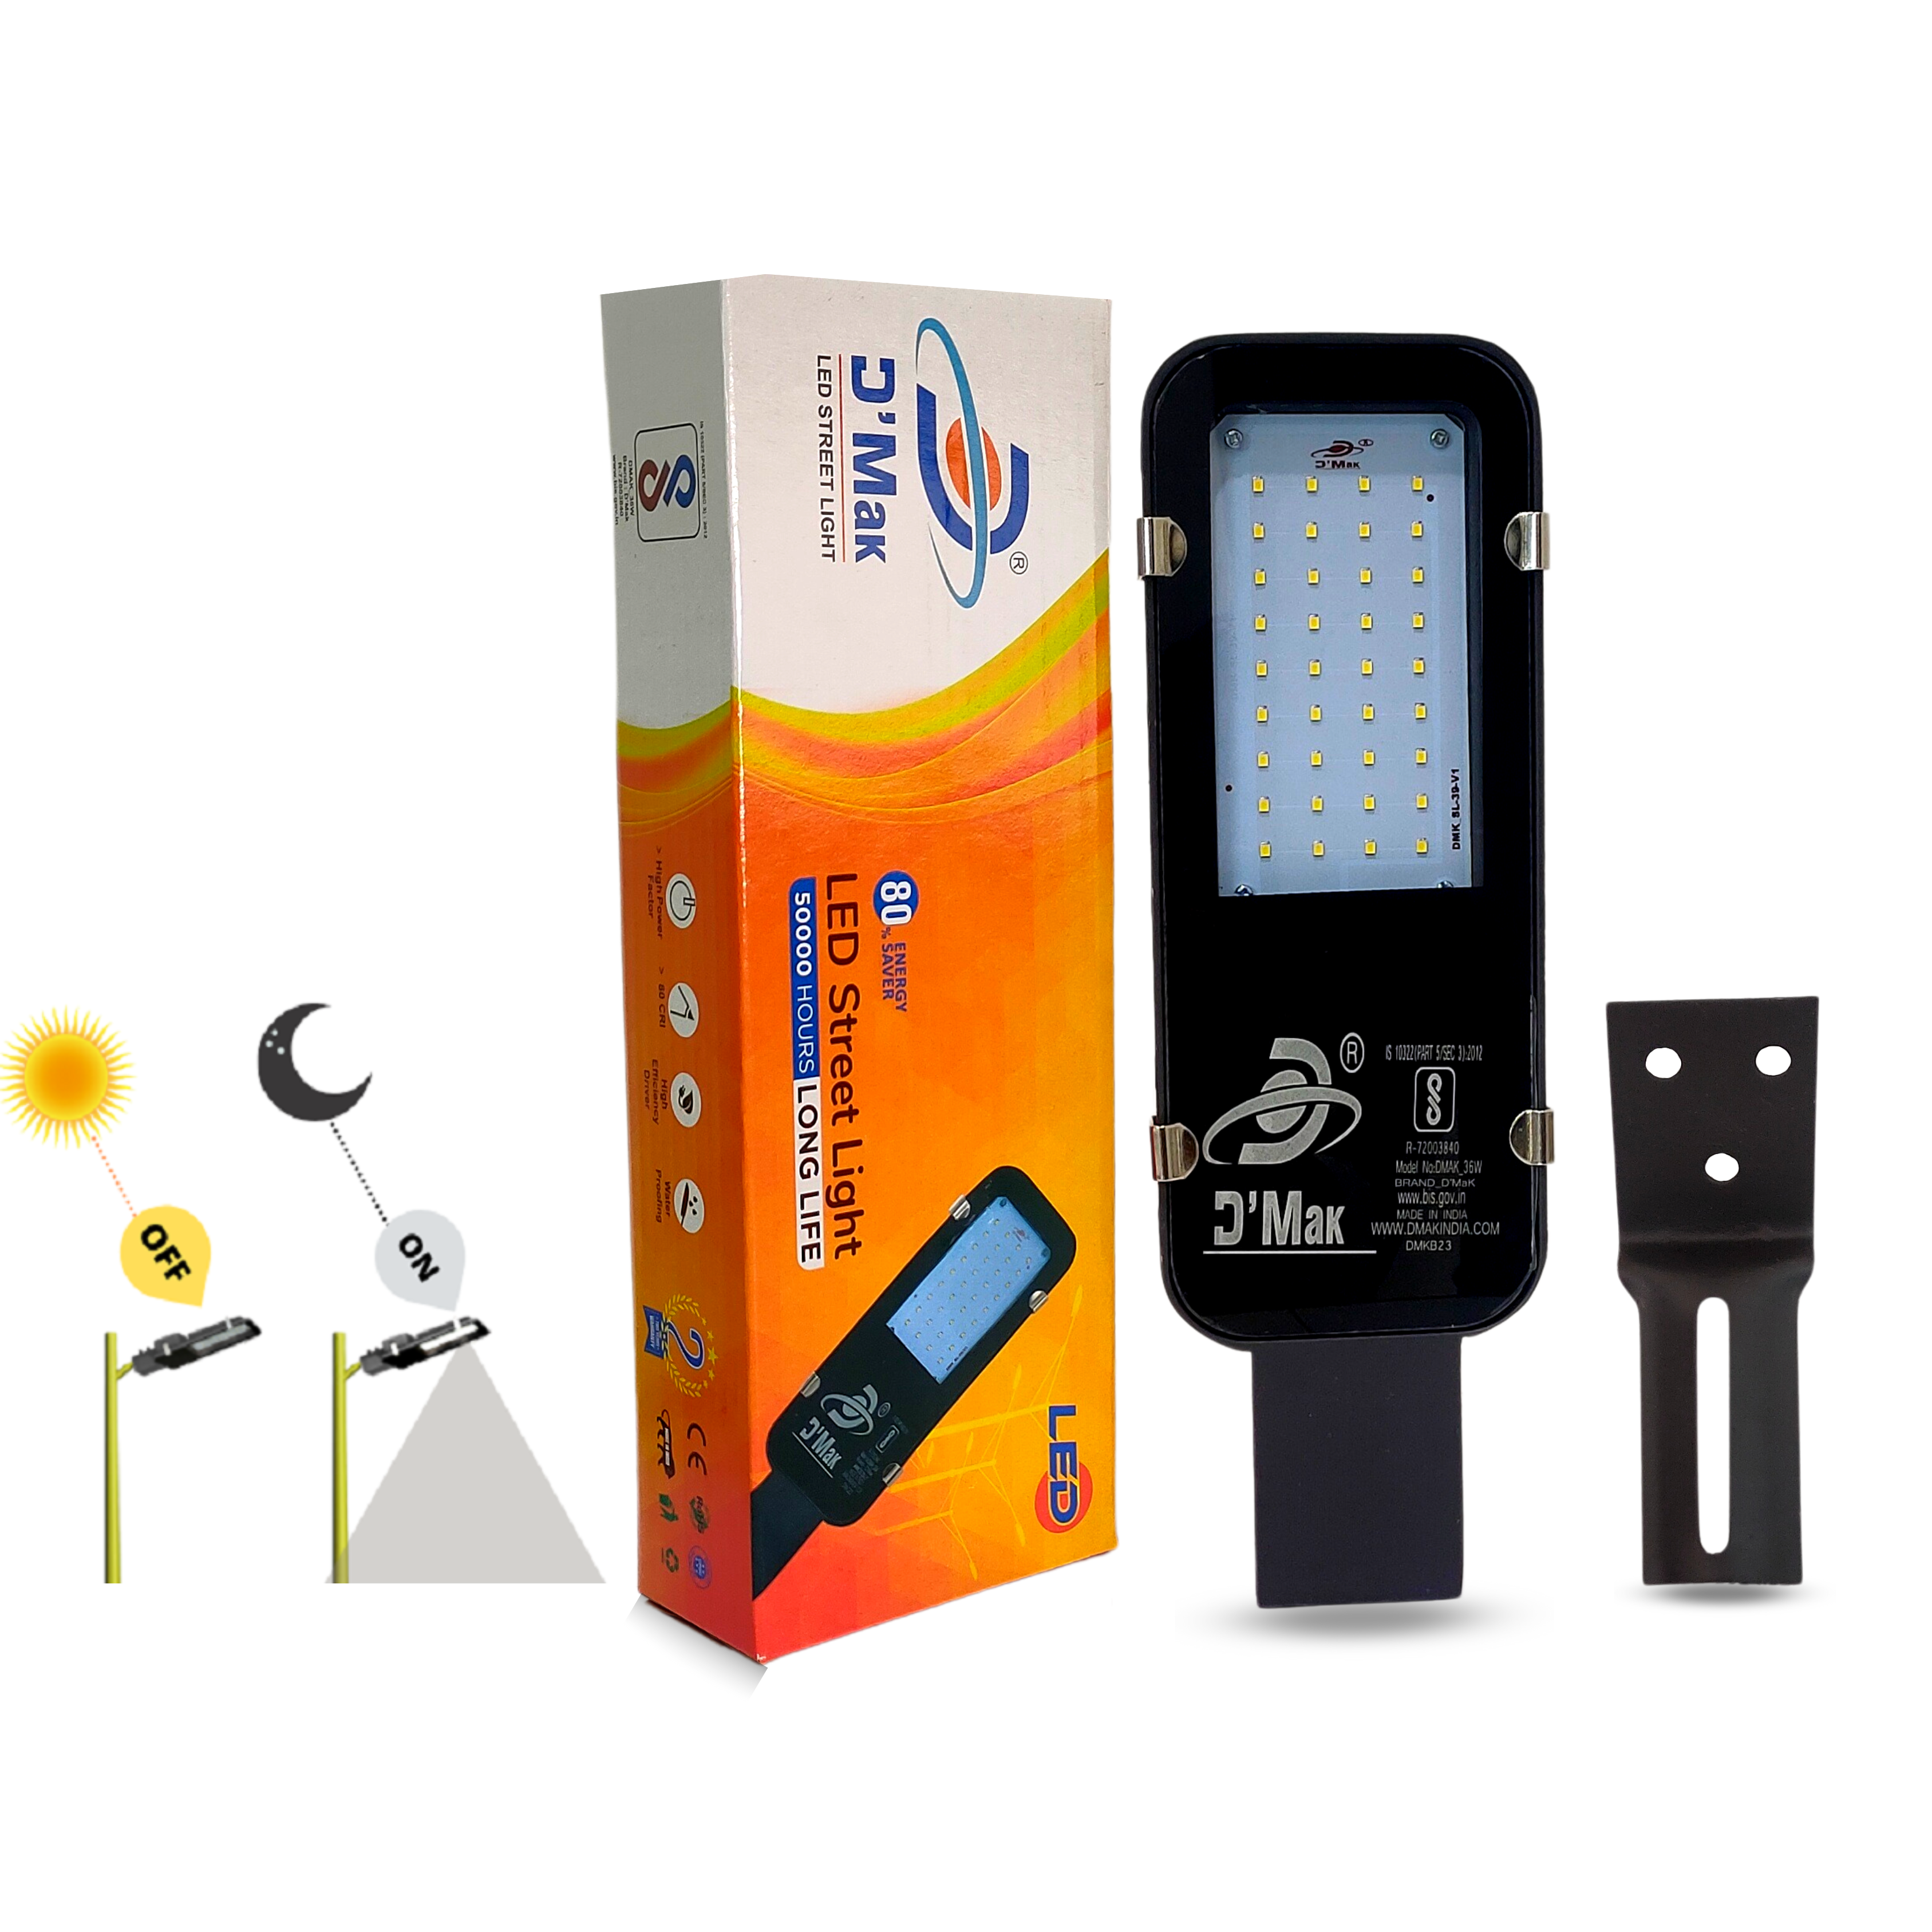 24 Watt Automatic Sensor System LED Street Light Waterproof IP65 for Outdoor Purposes